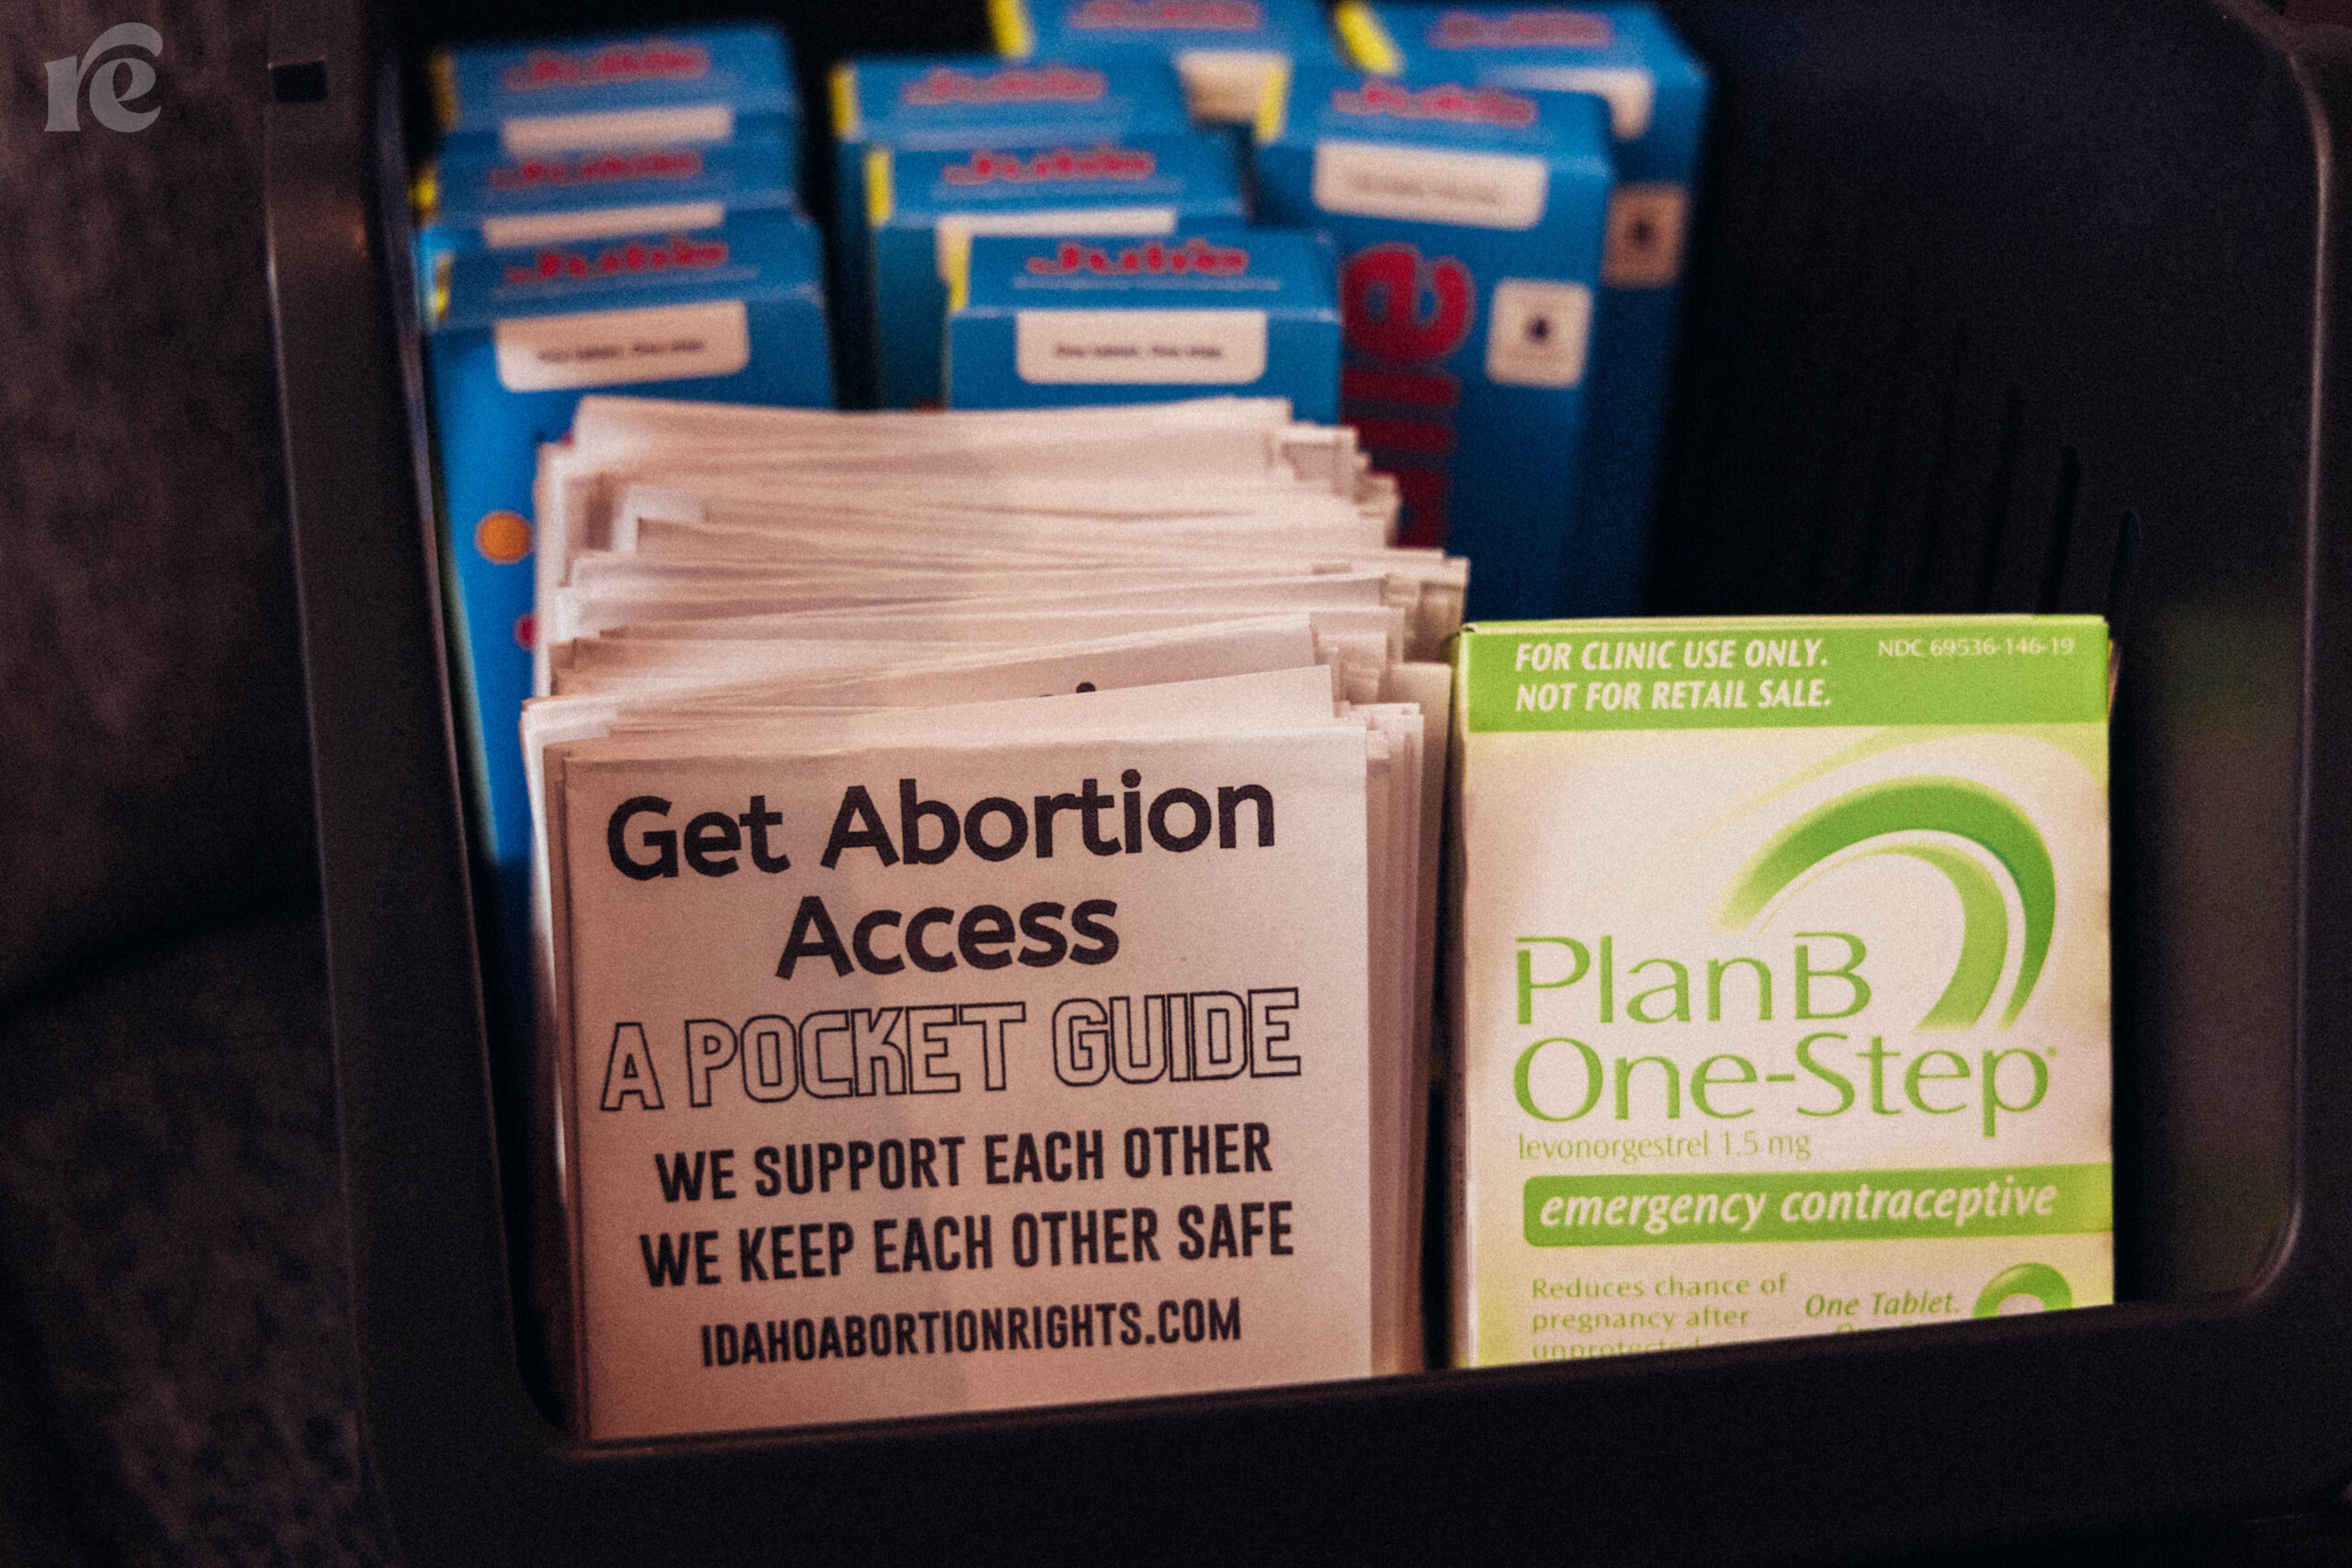 Reproductive health supplies